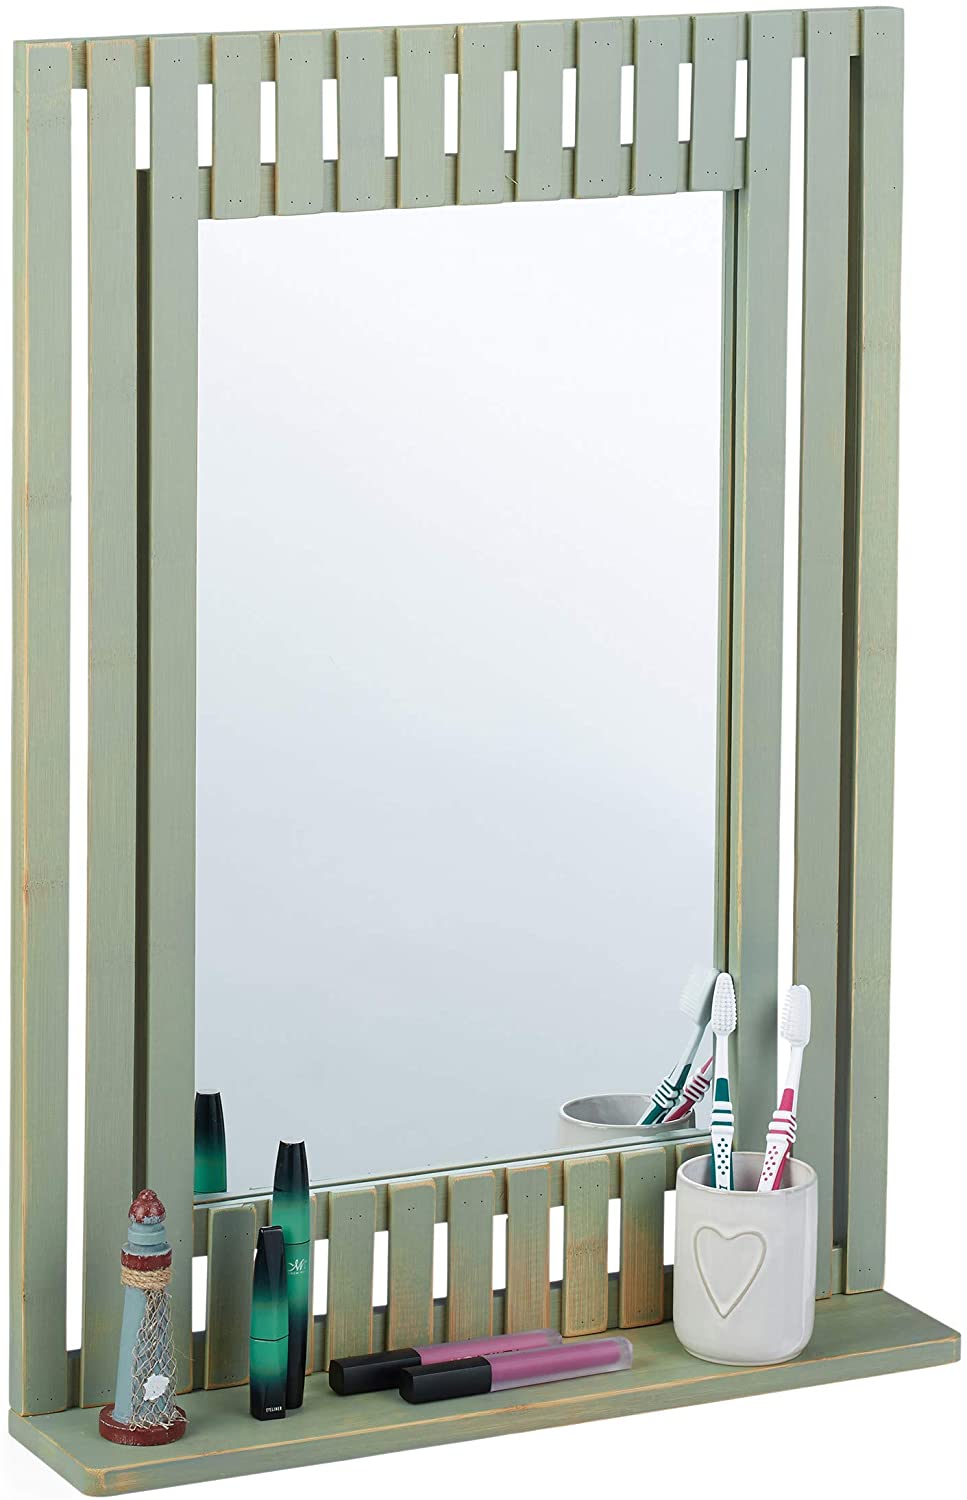 Relaxdays Bamboo Wall Mirror With Shelf Rectangular Bathroom Hallway Living